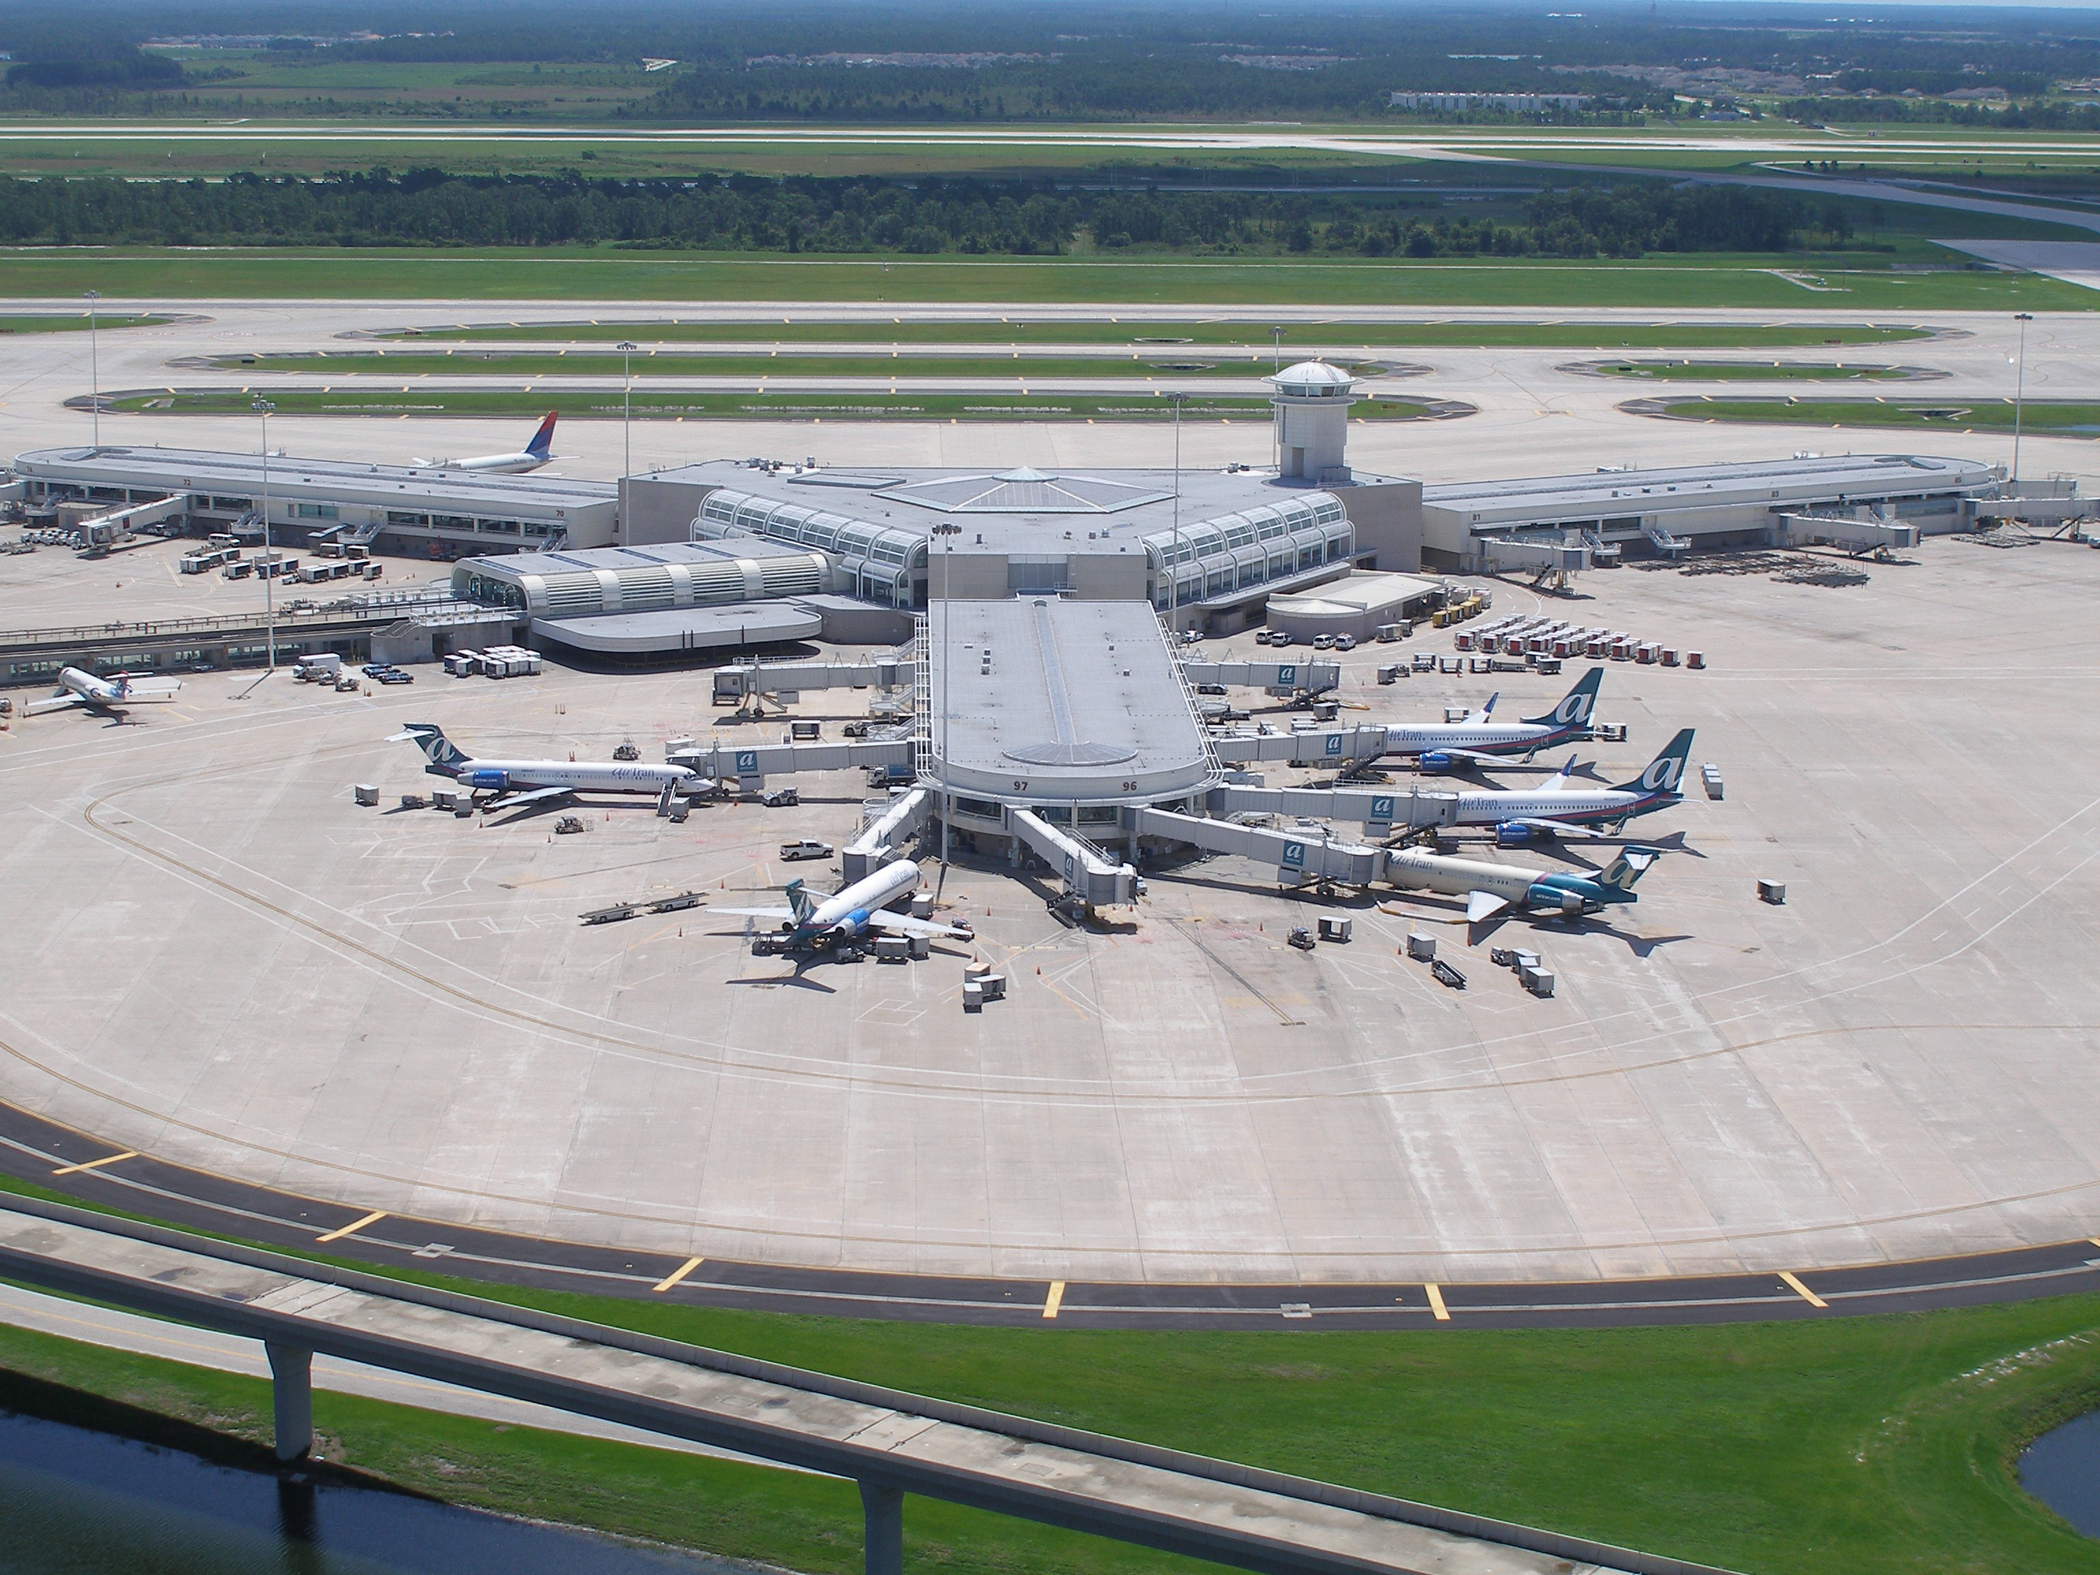 Orlando International Airport (MCO)